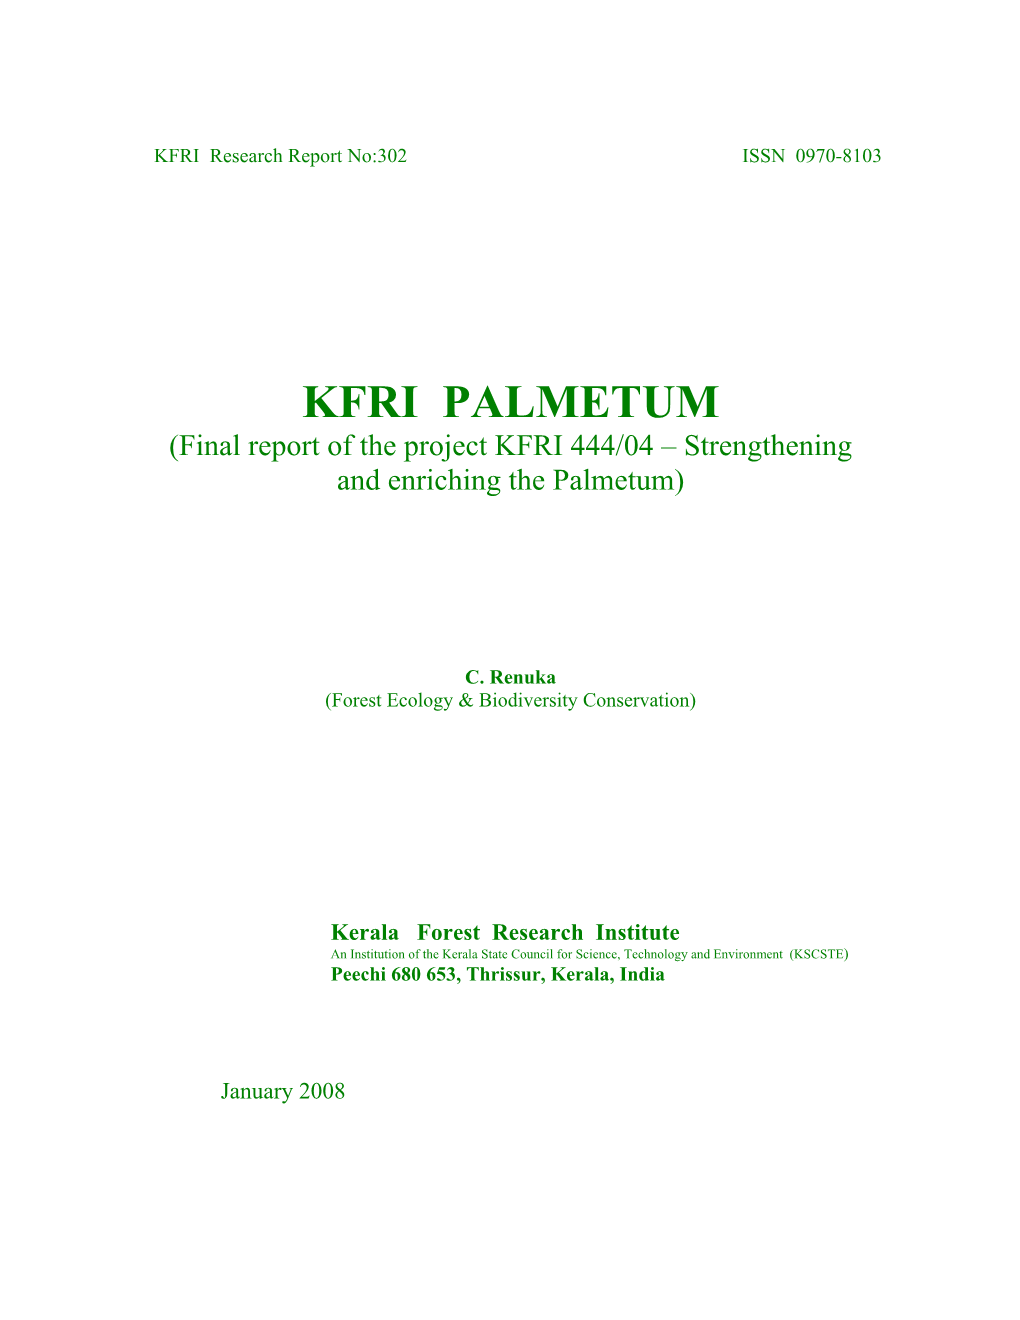 KFRI PALMETUM (Final Report of the Project KFRI 444/04 – Strengthening and Enriching the Palmetum)